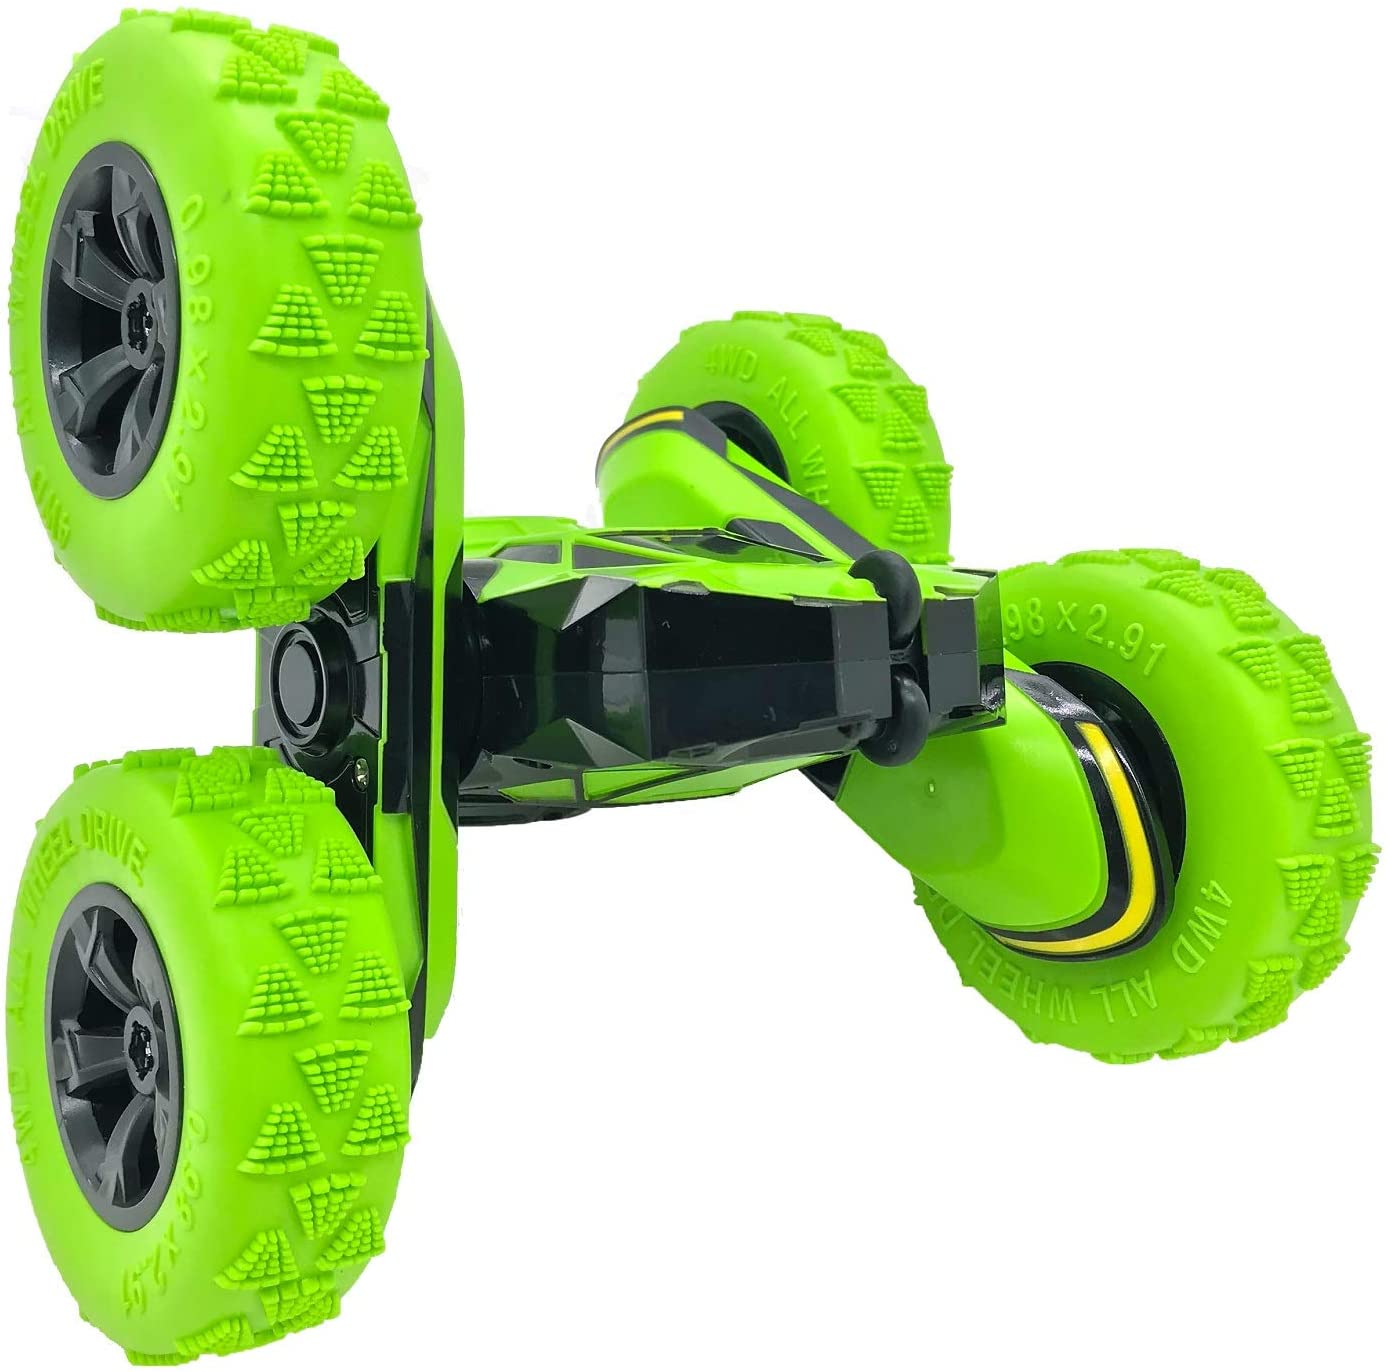 Rotating Atom Max Remote Control Car Toy